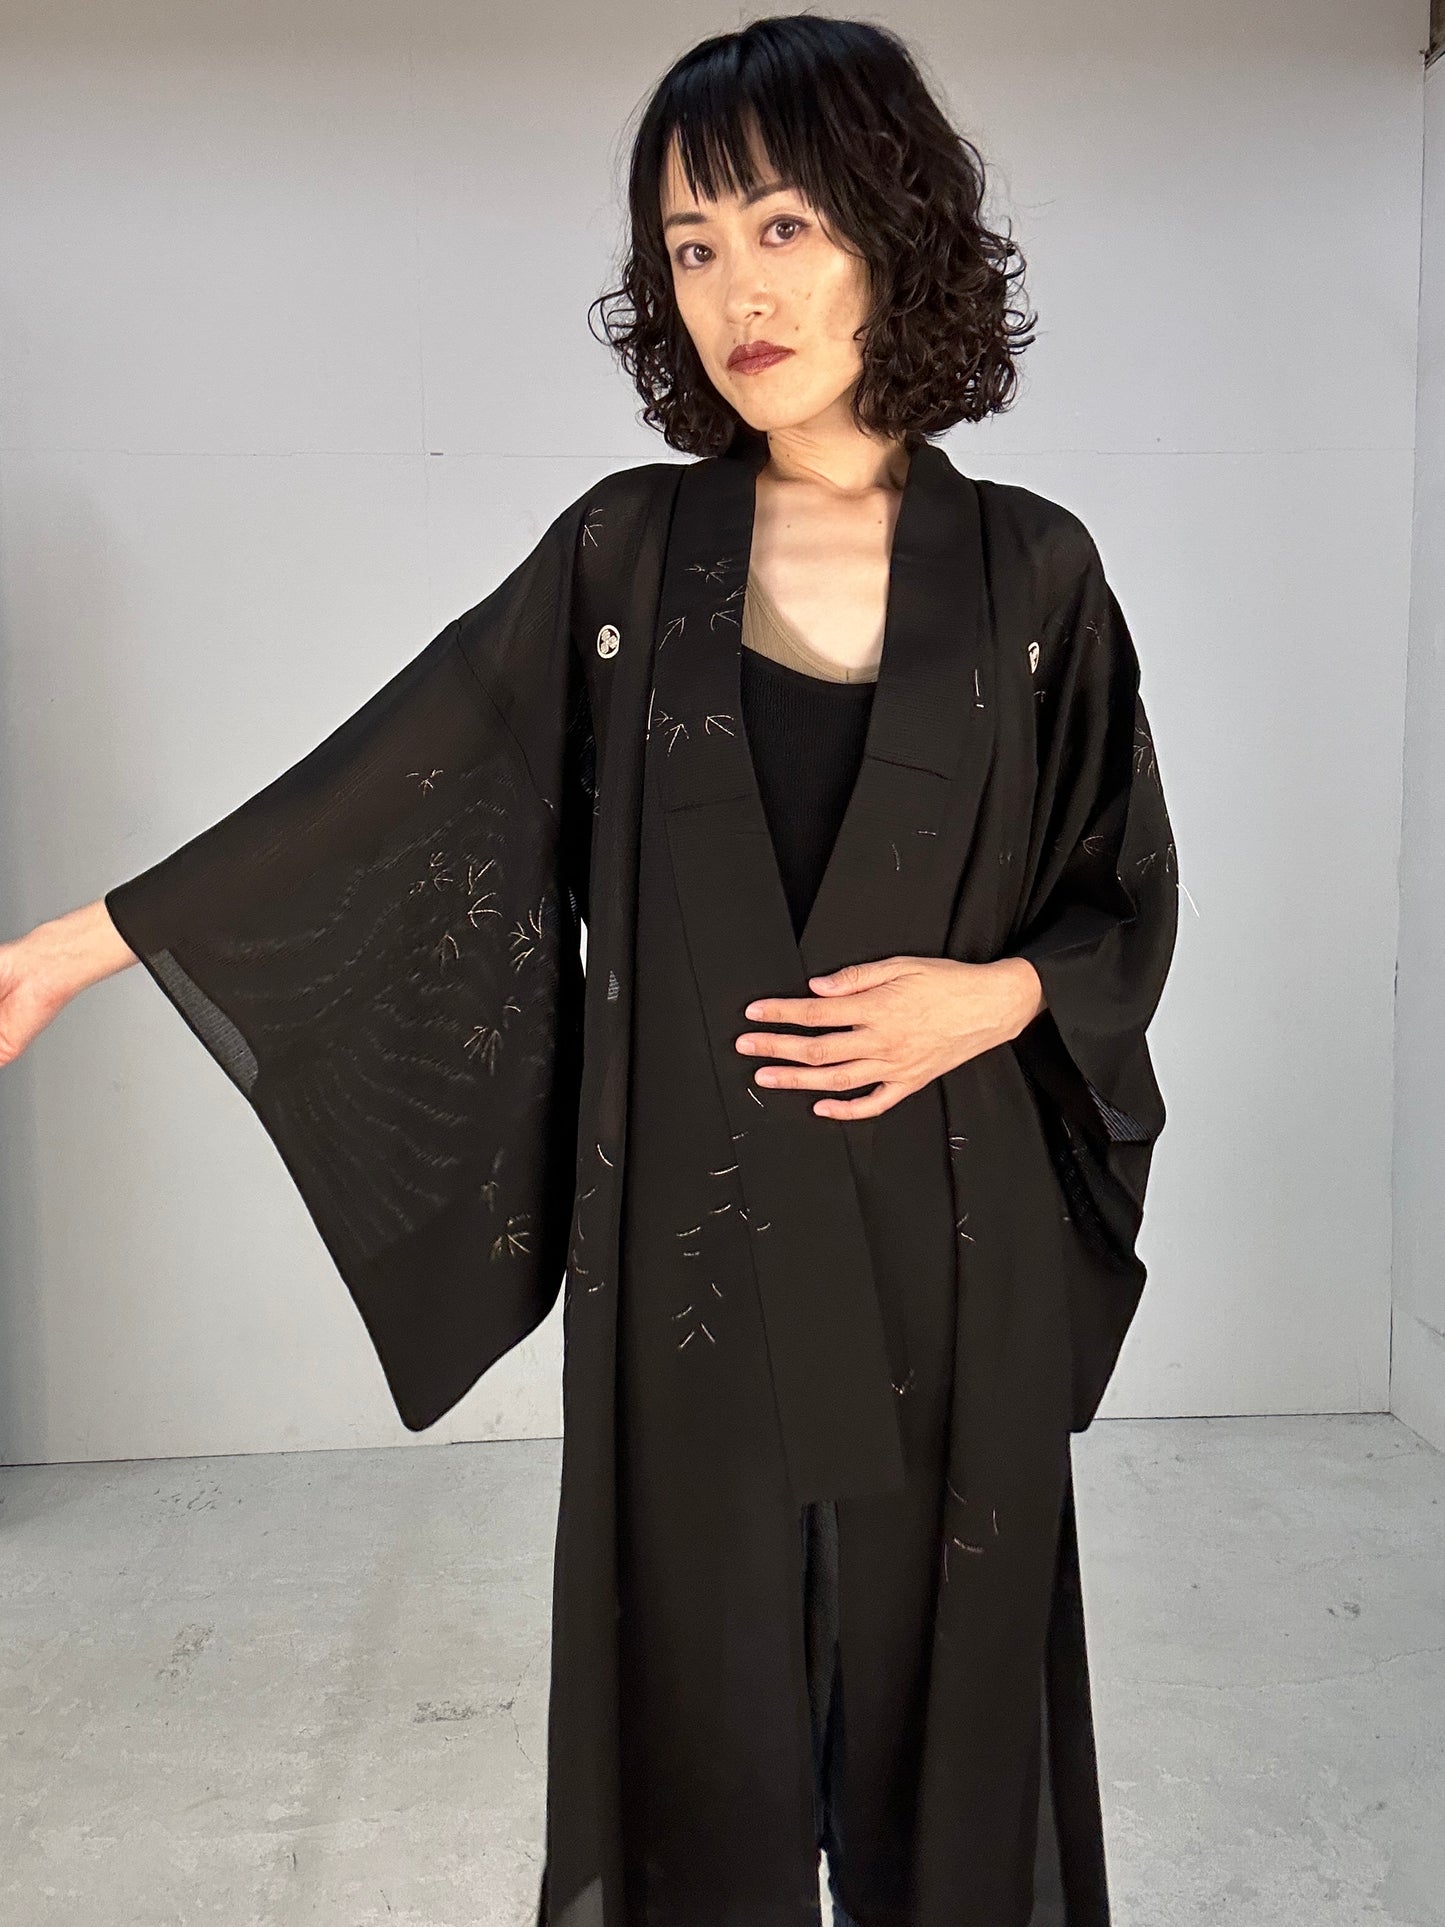 SHEER kimono dress gown and string belt upcycled from Japanese kimono "kin ashiato"